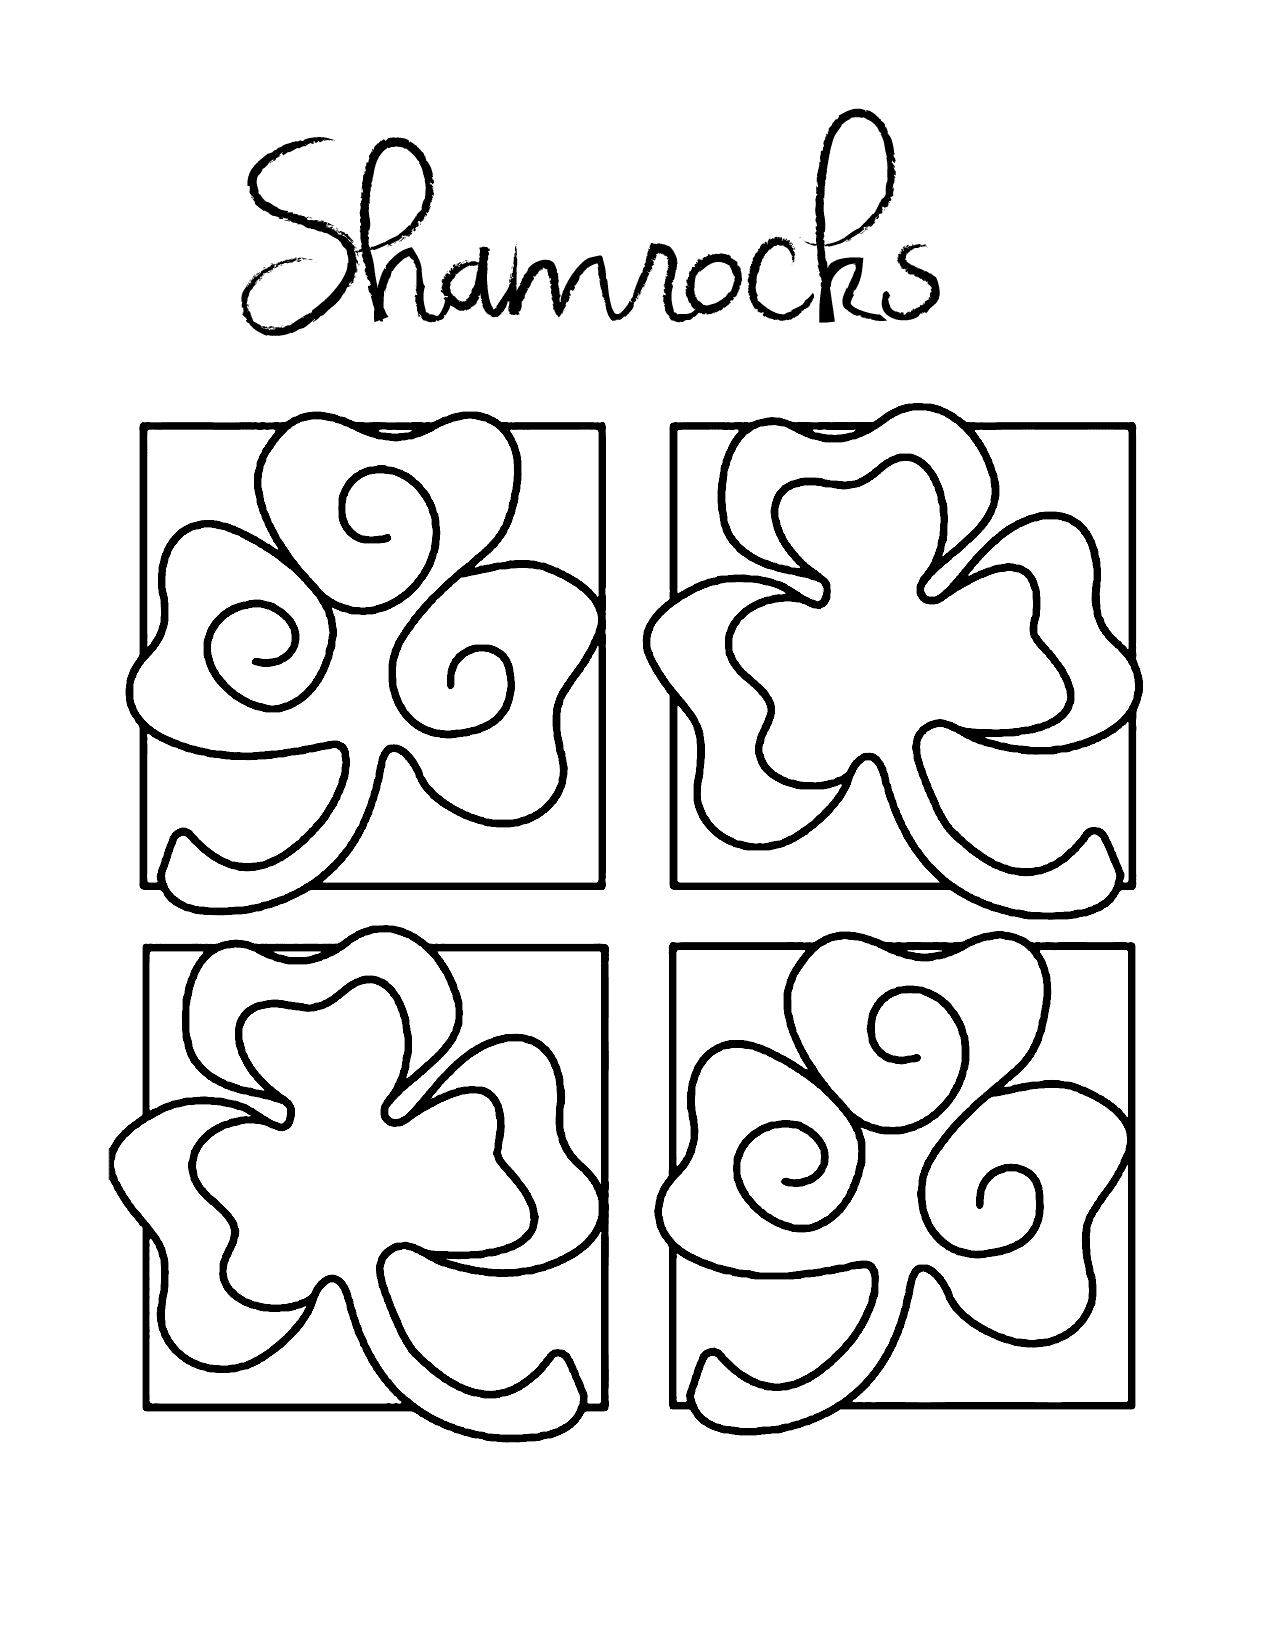 Pretty Shamrocks Coloring Page